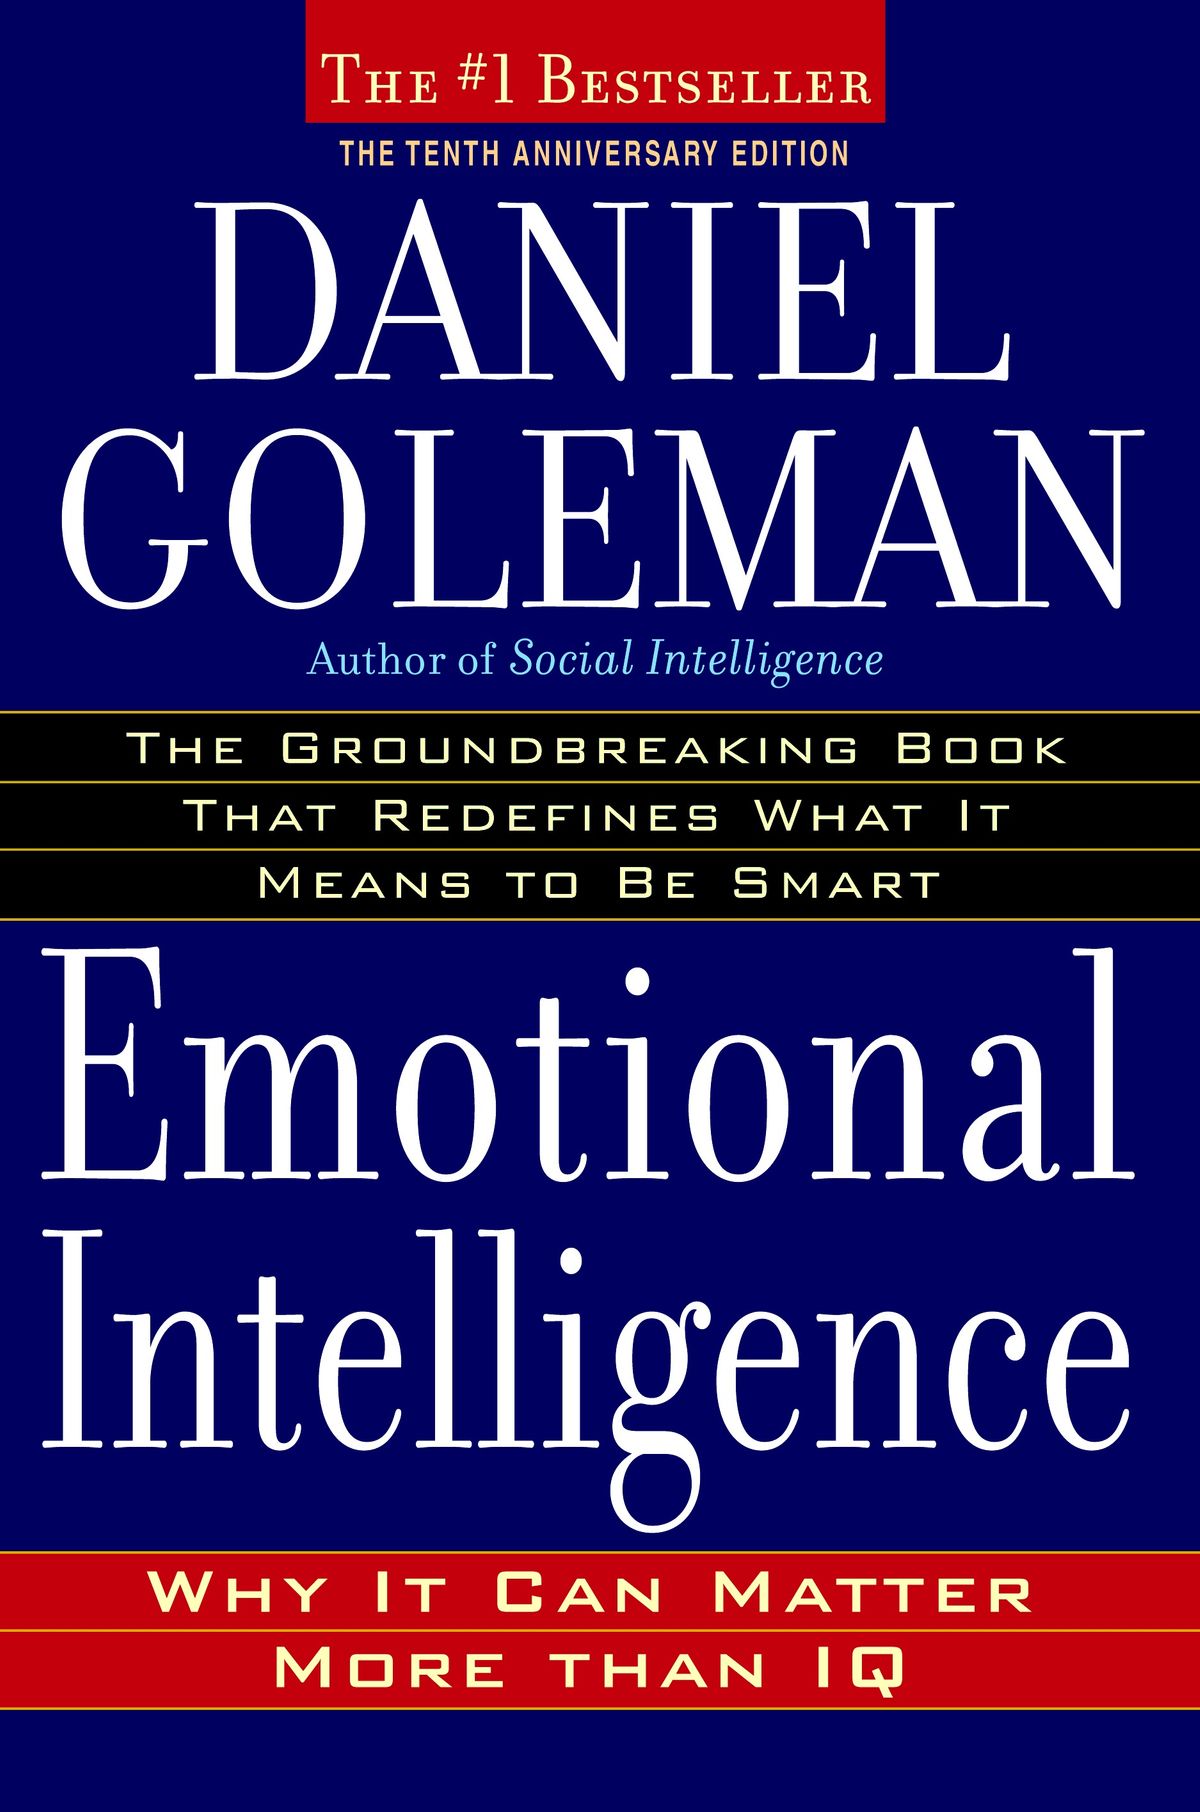 Click for Daniel Golman Emotional Intelligence